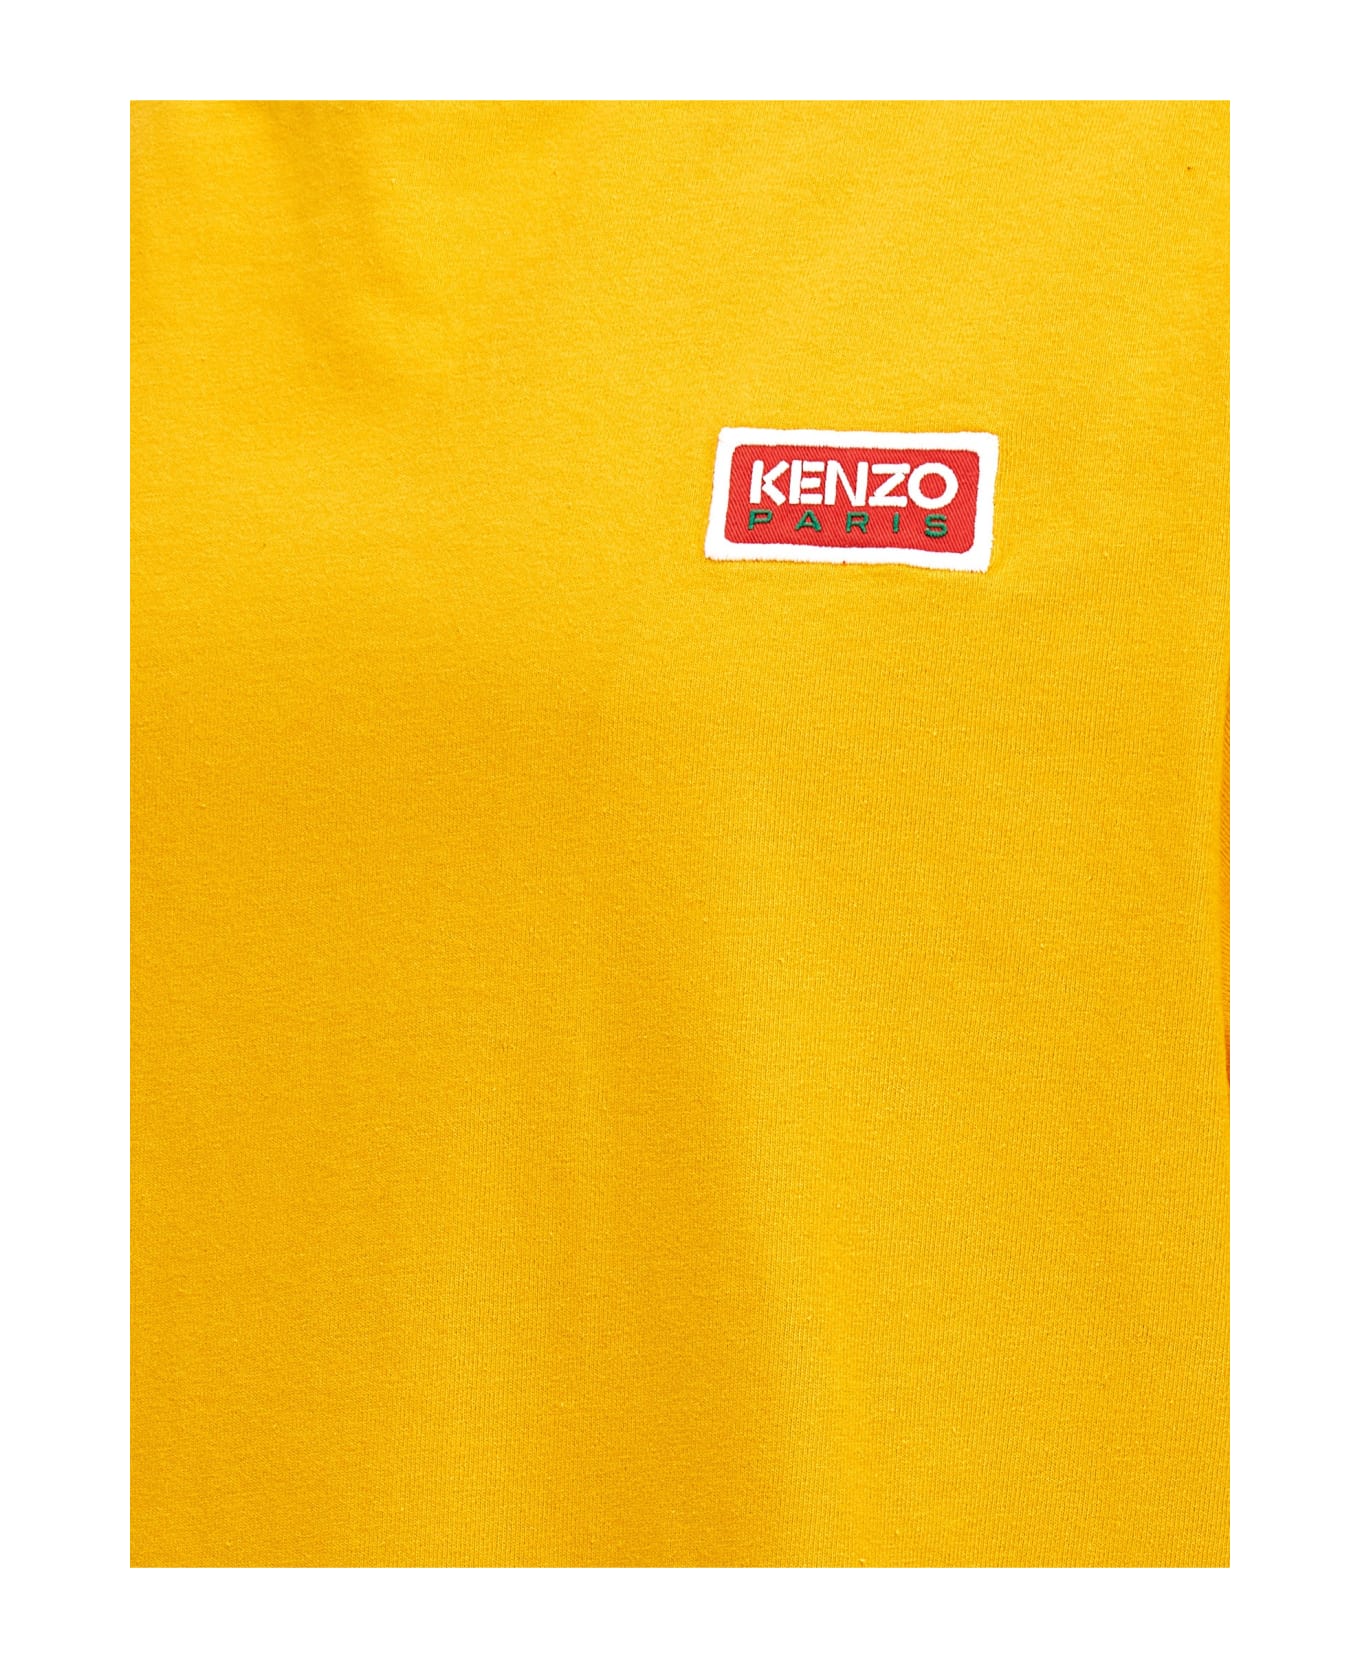 Kenzo Paris T-shirt - Yellow